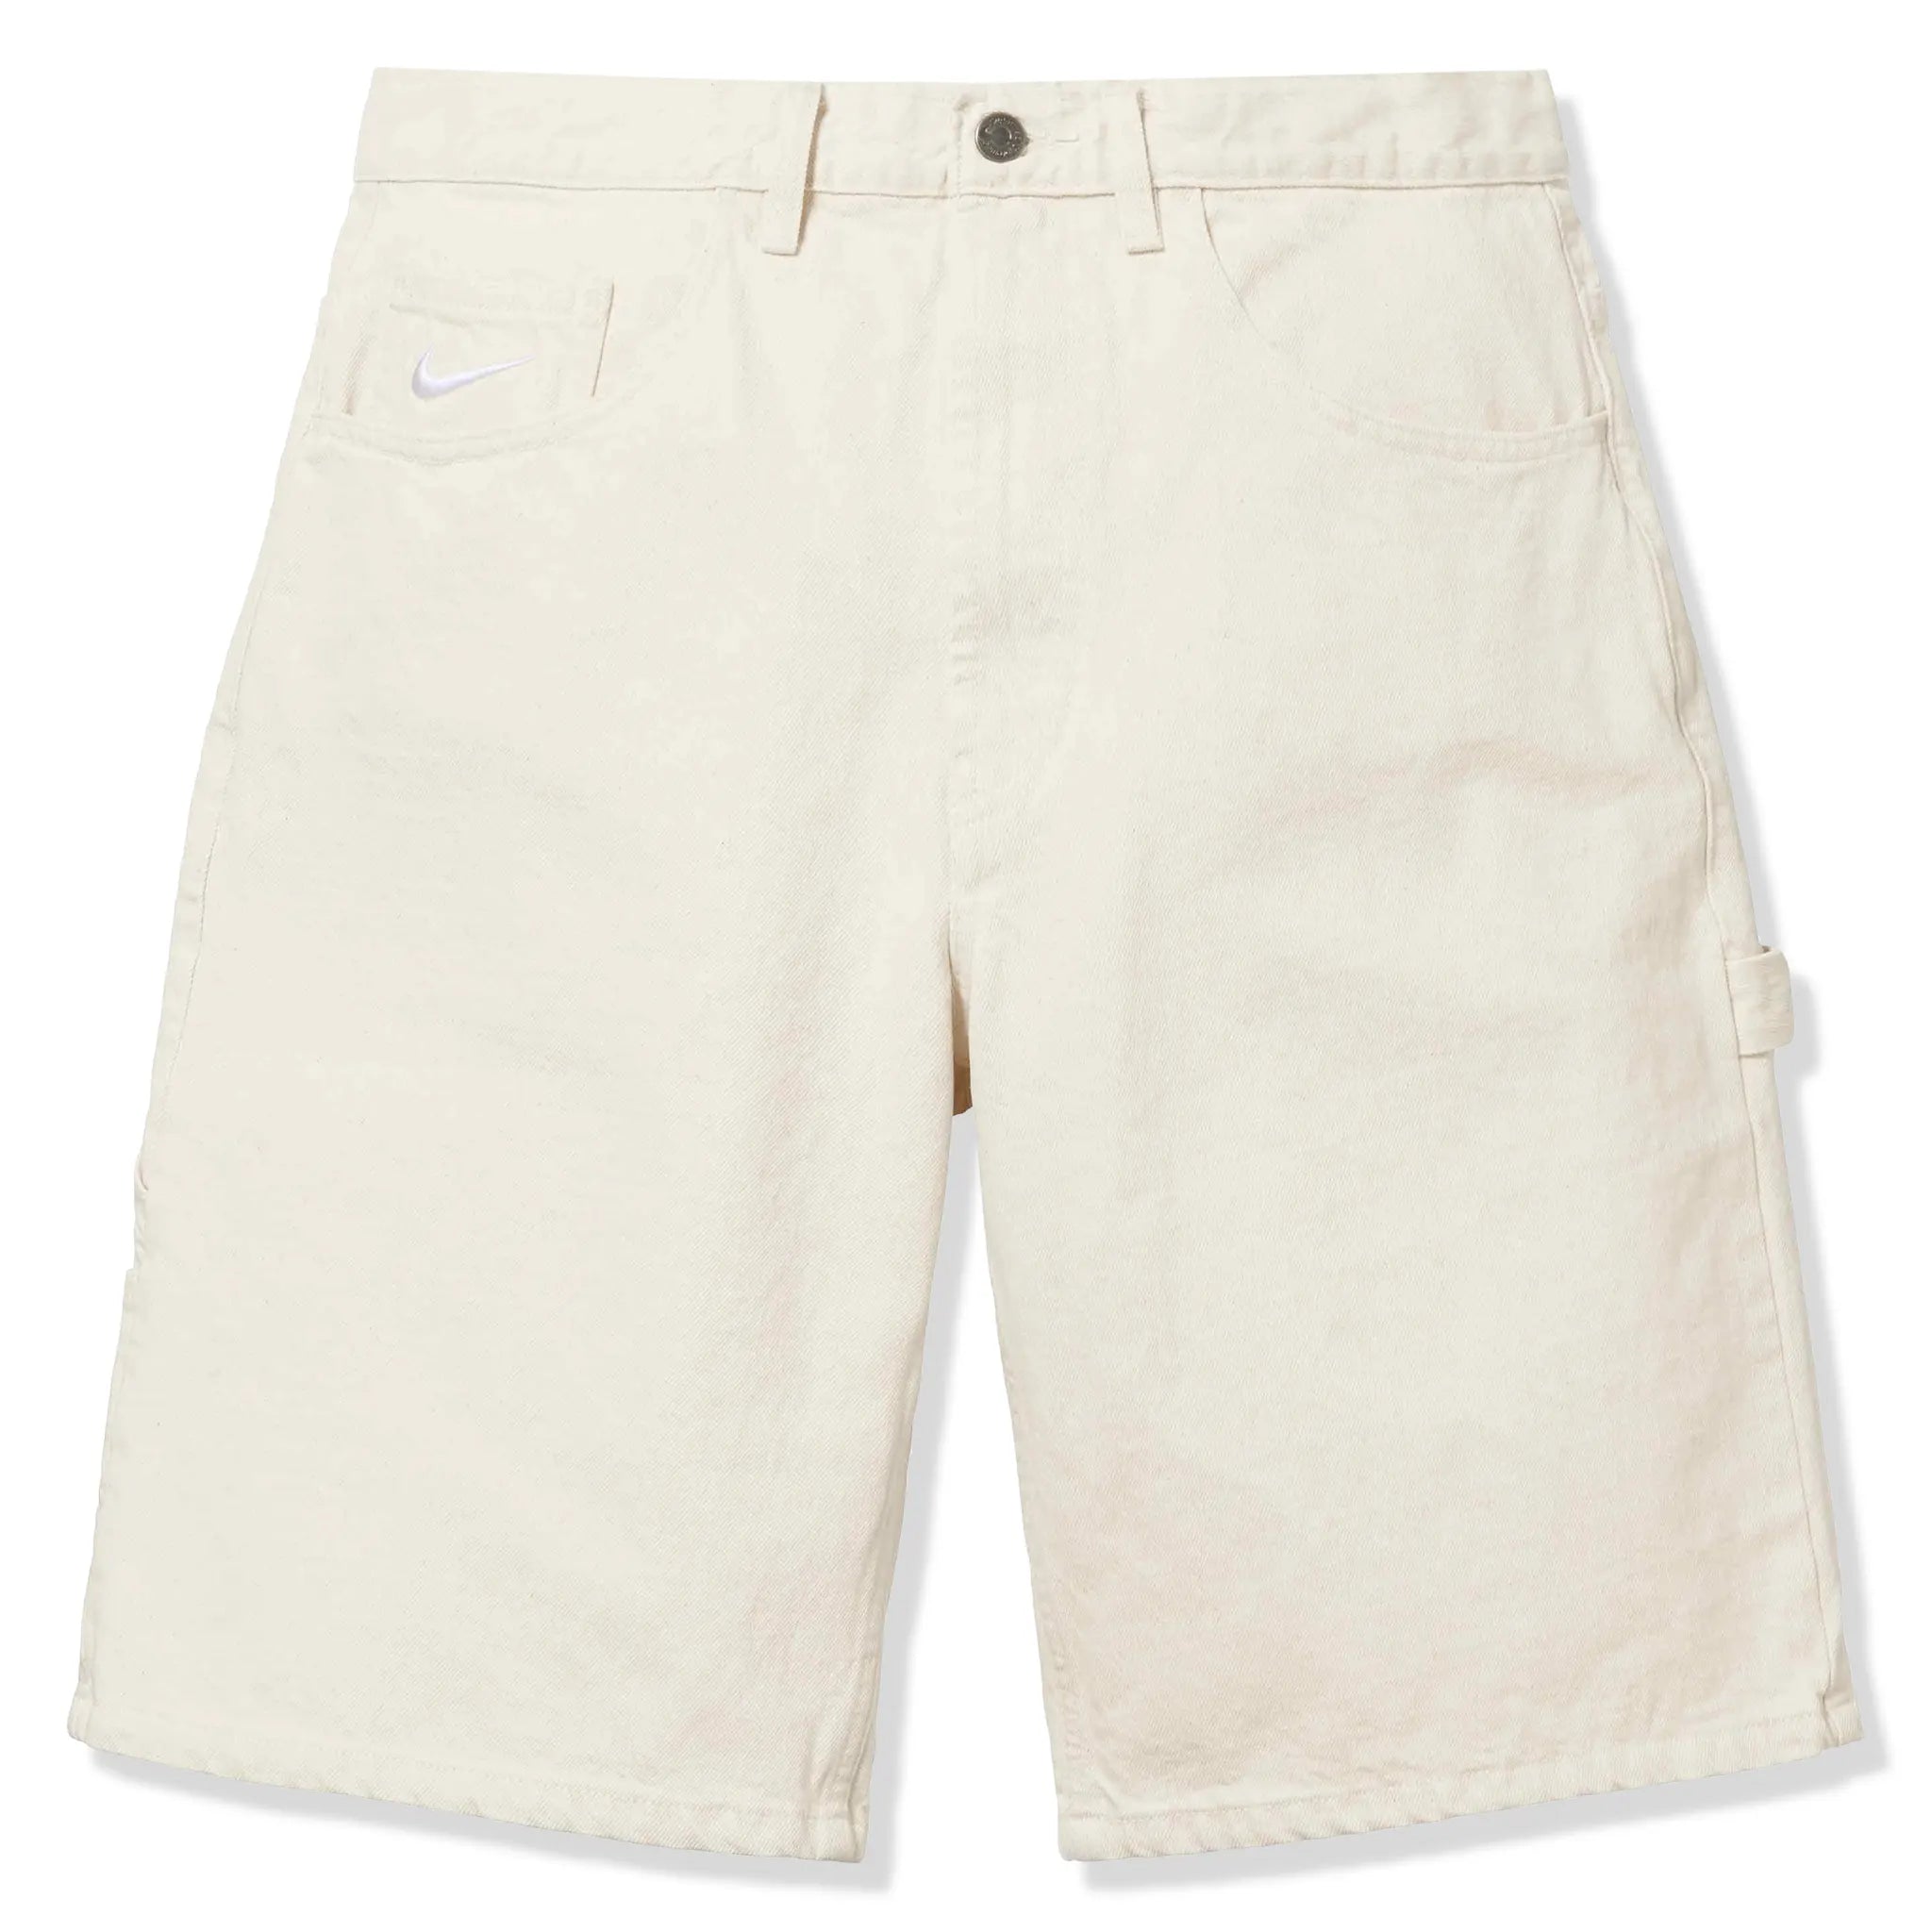 Front view of Nike Supreme Denim Natural White Shorts